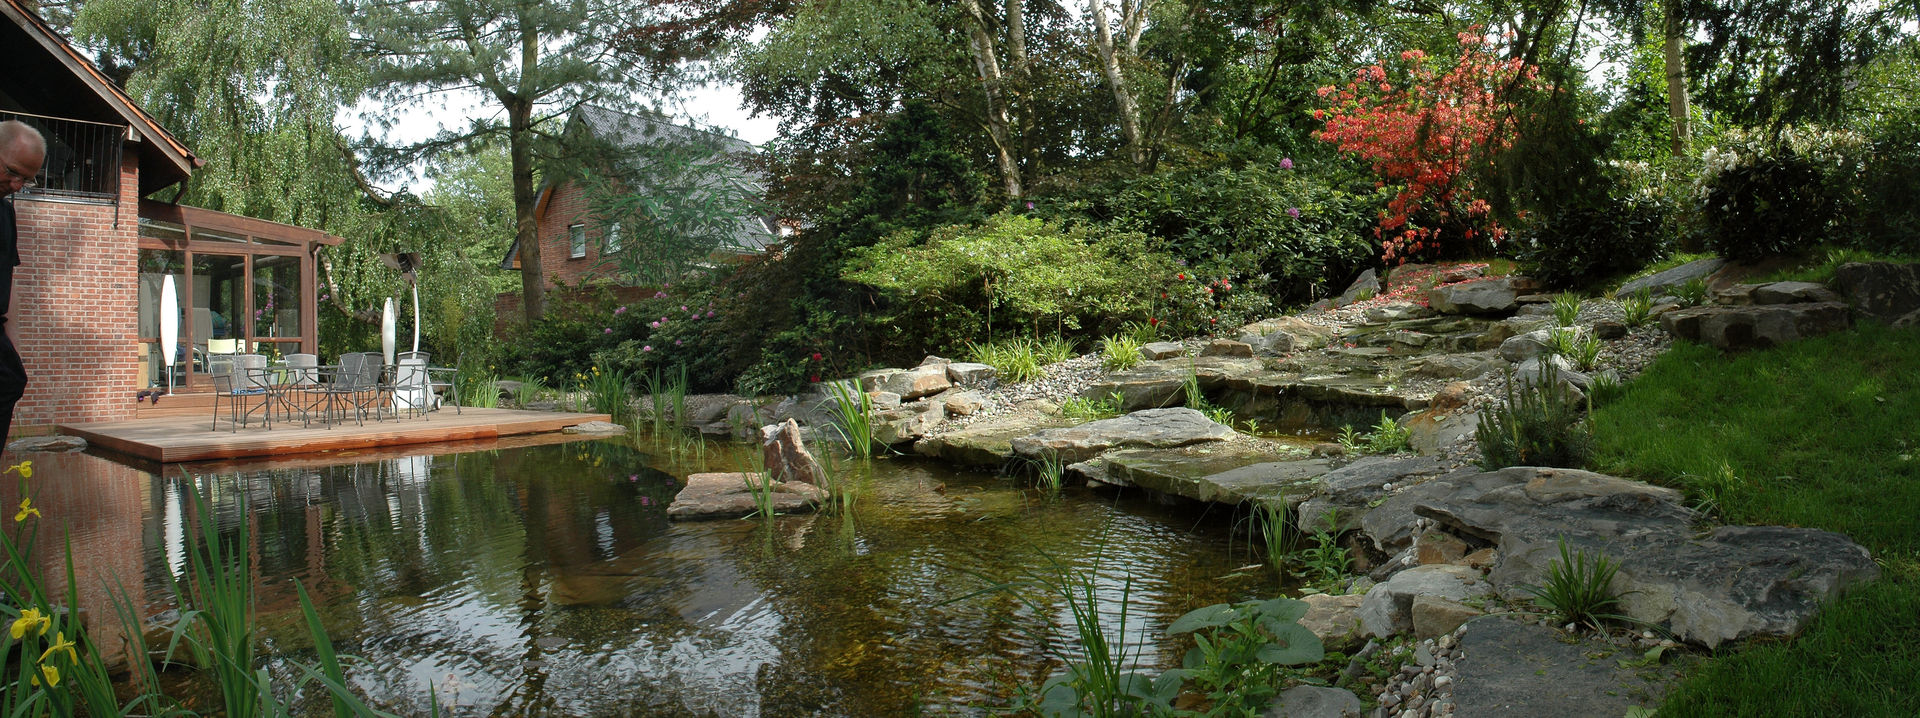 Ogród, Architektura krajobrazu- naturalne systemy uzdatniania wod Architektura krajobrazu- naturalne systemy uzdatniania wod Сад